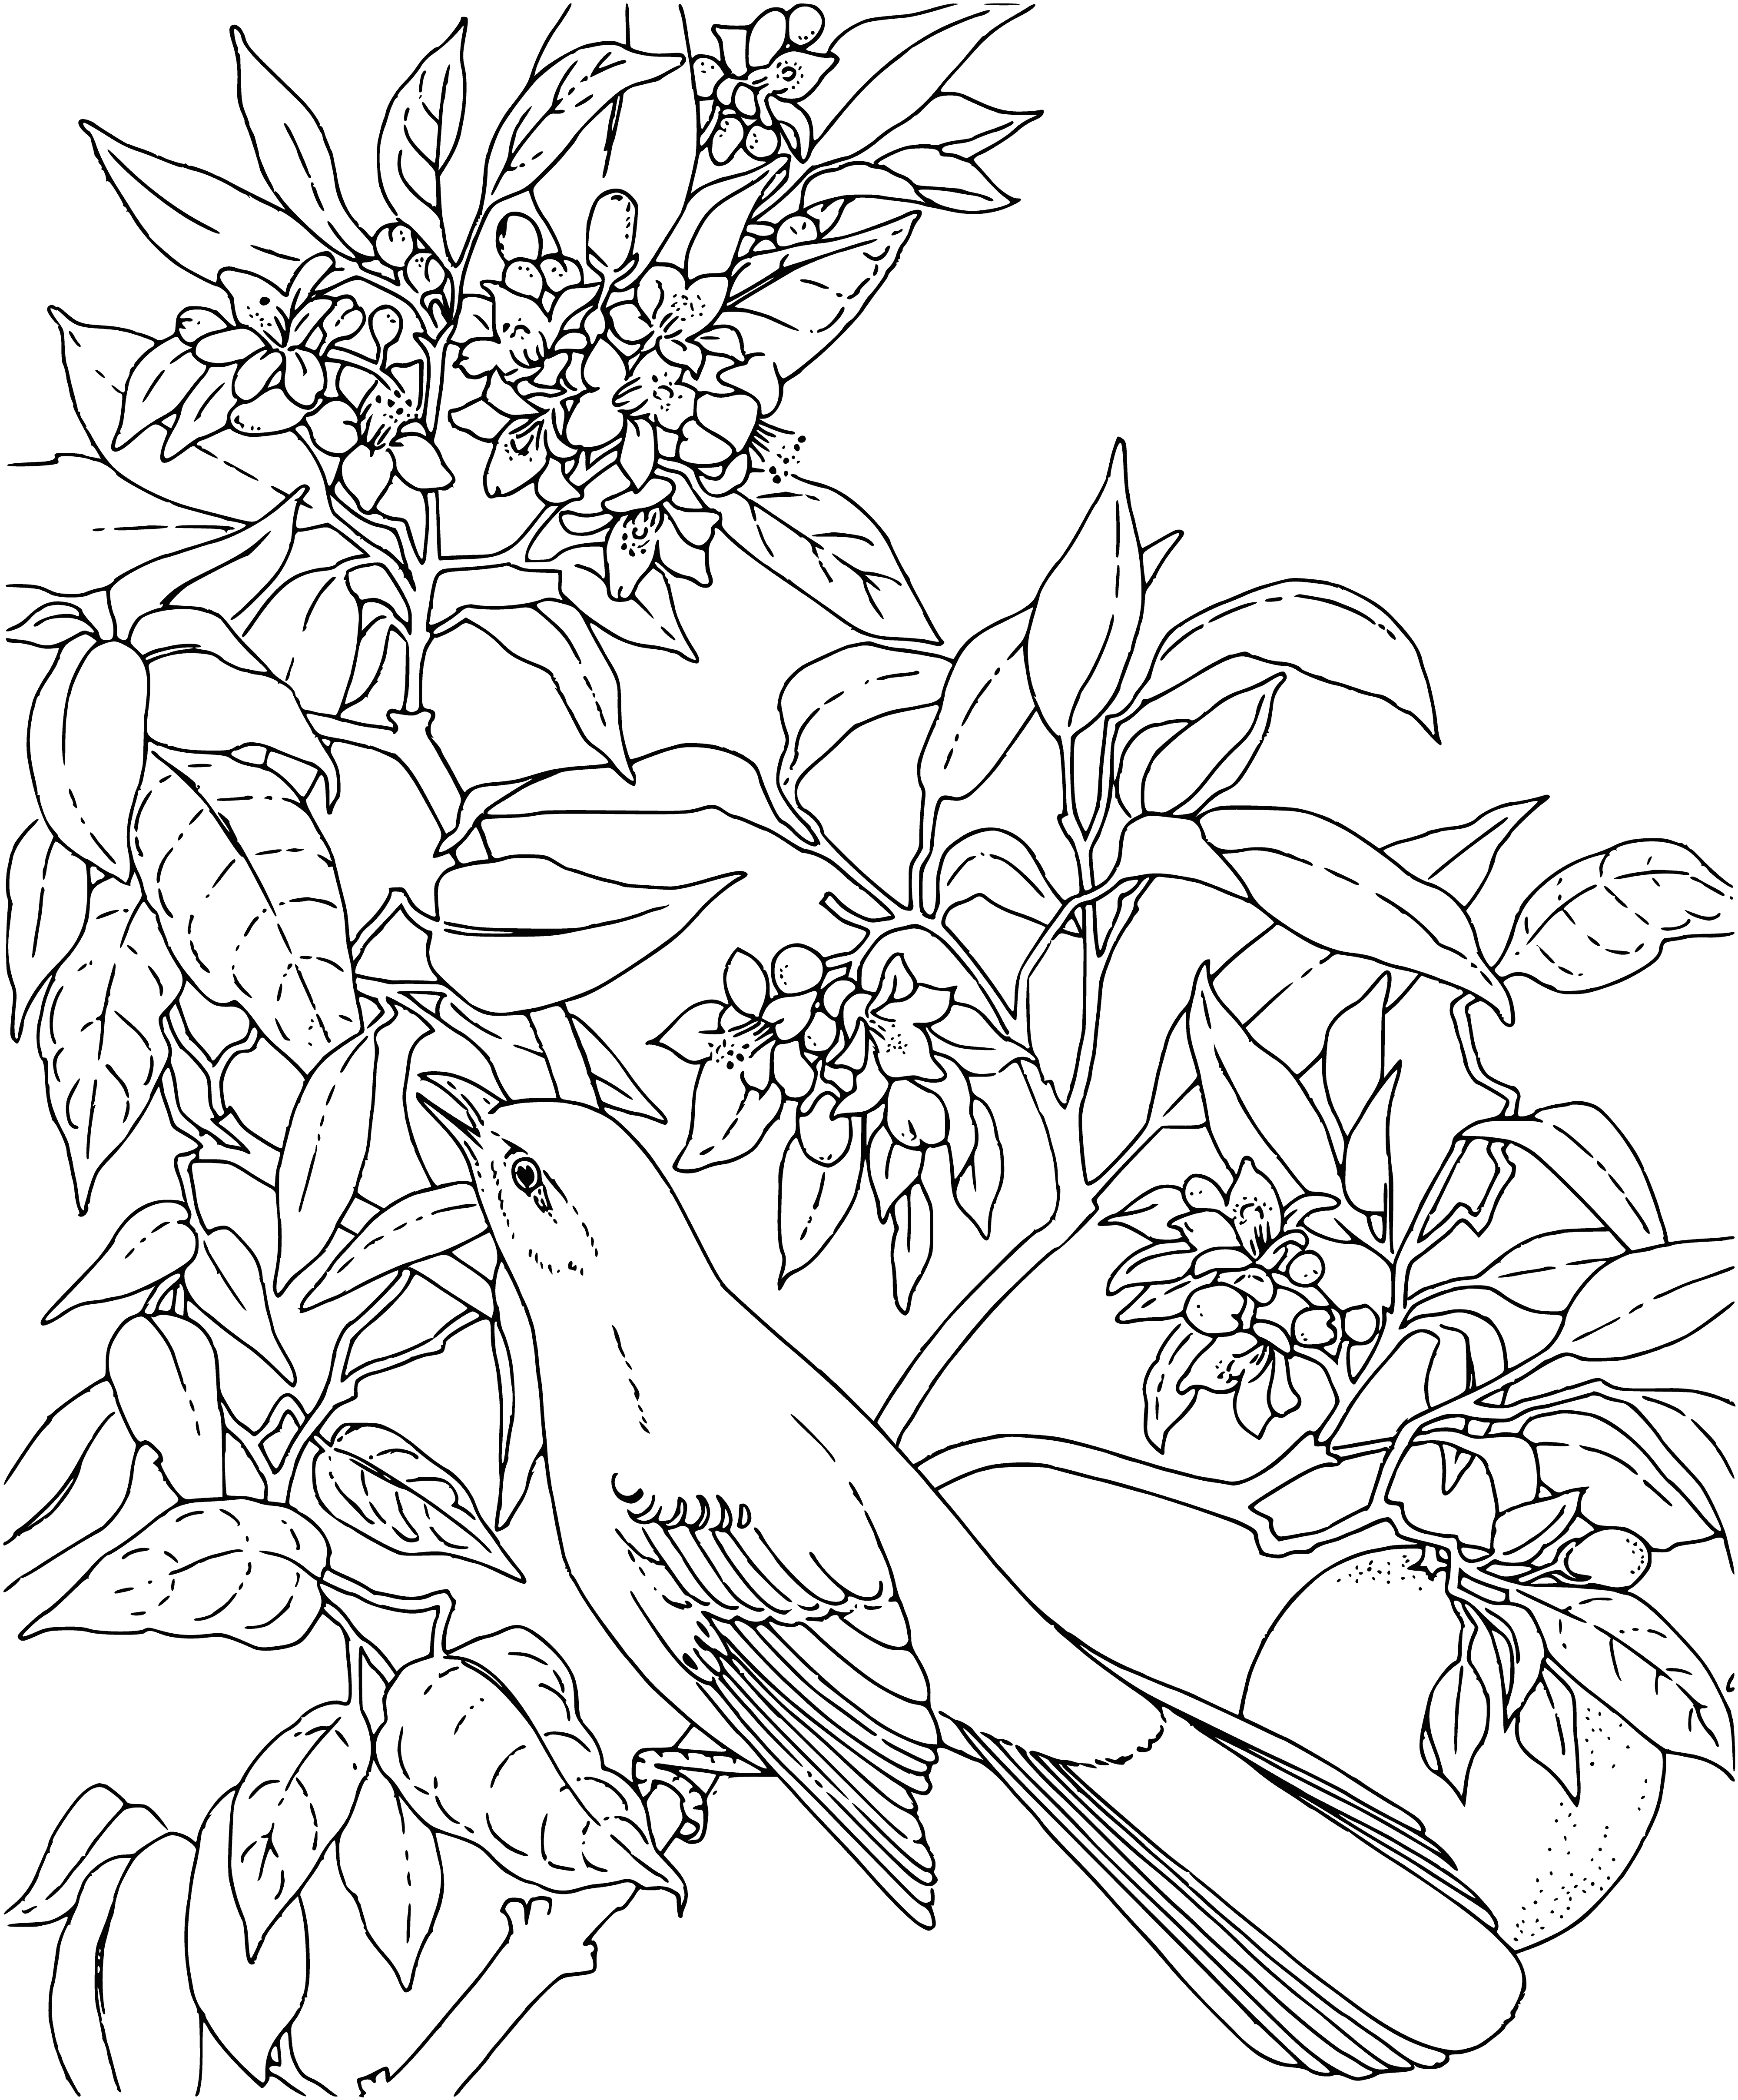 Mockingbird coloring page